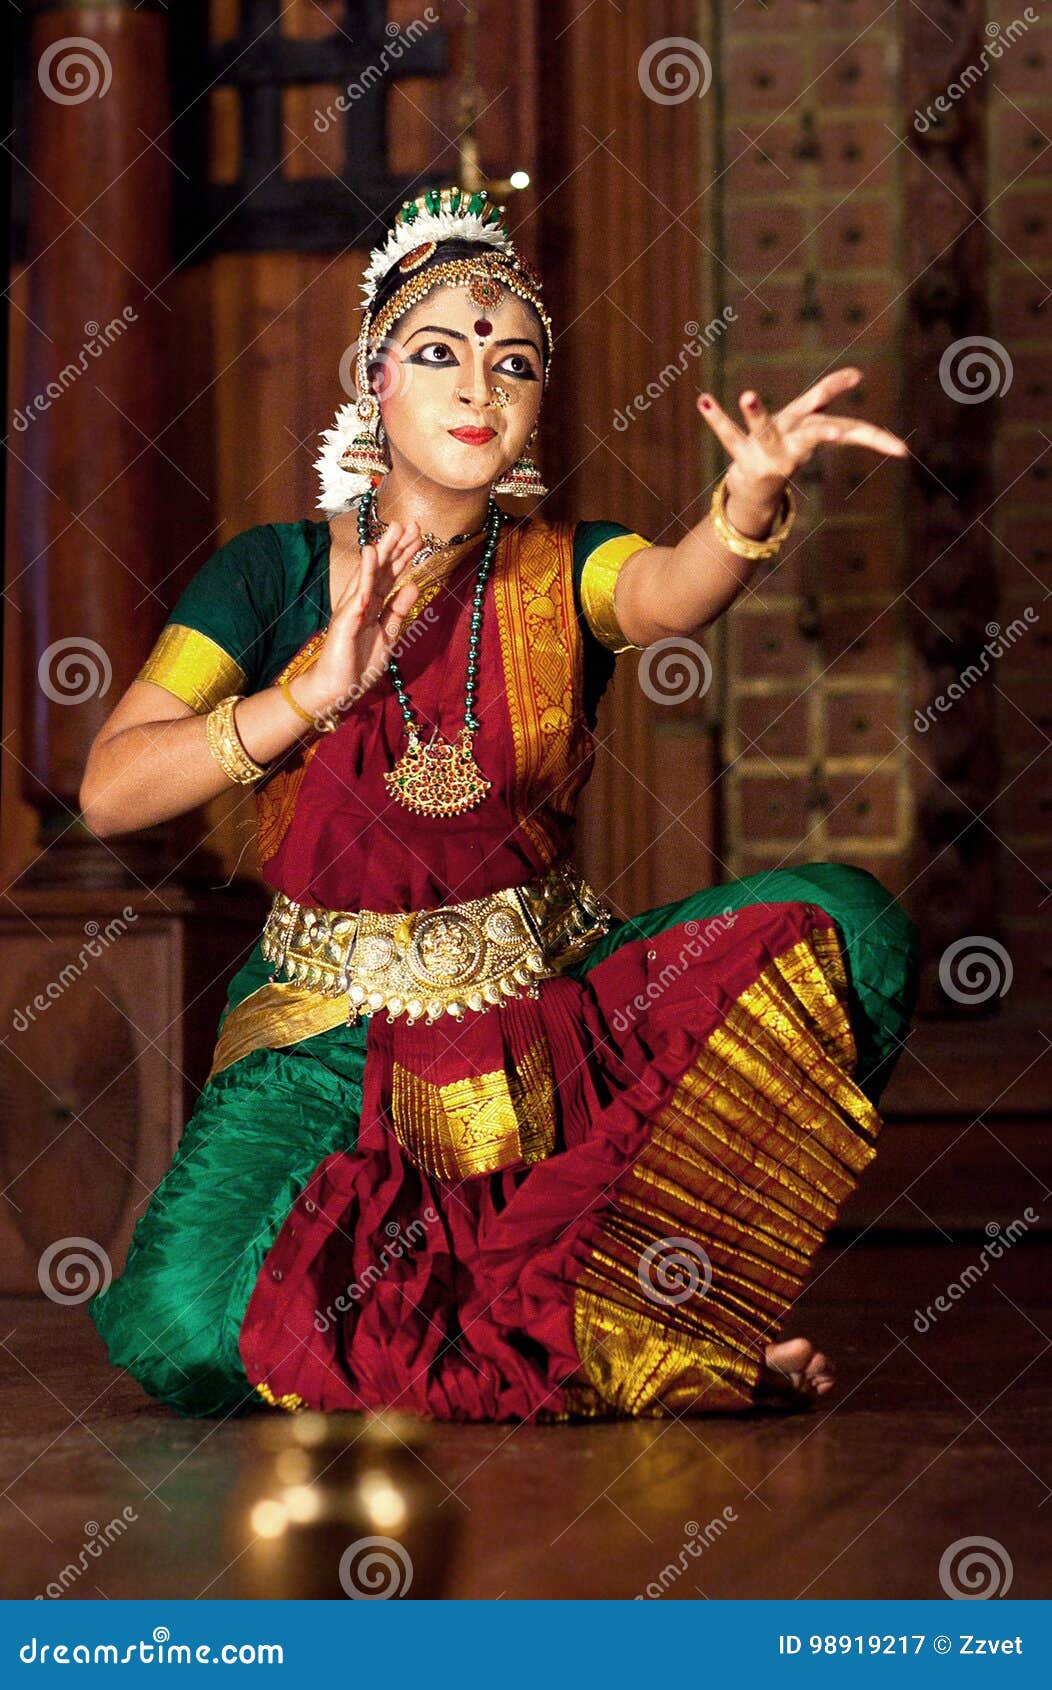 Indian Girl Dancing Kuchipudi Dance Editorial Photography - Image ...